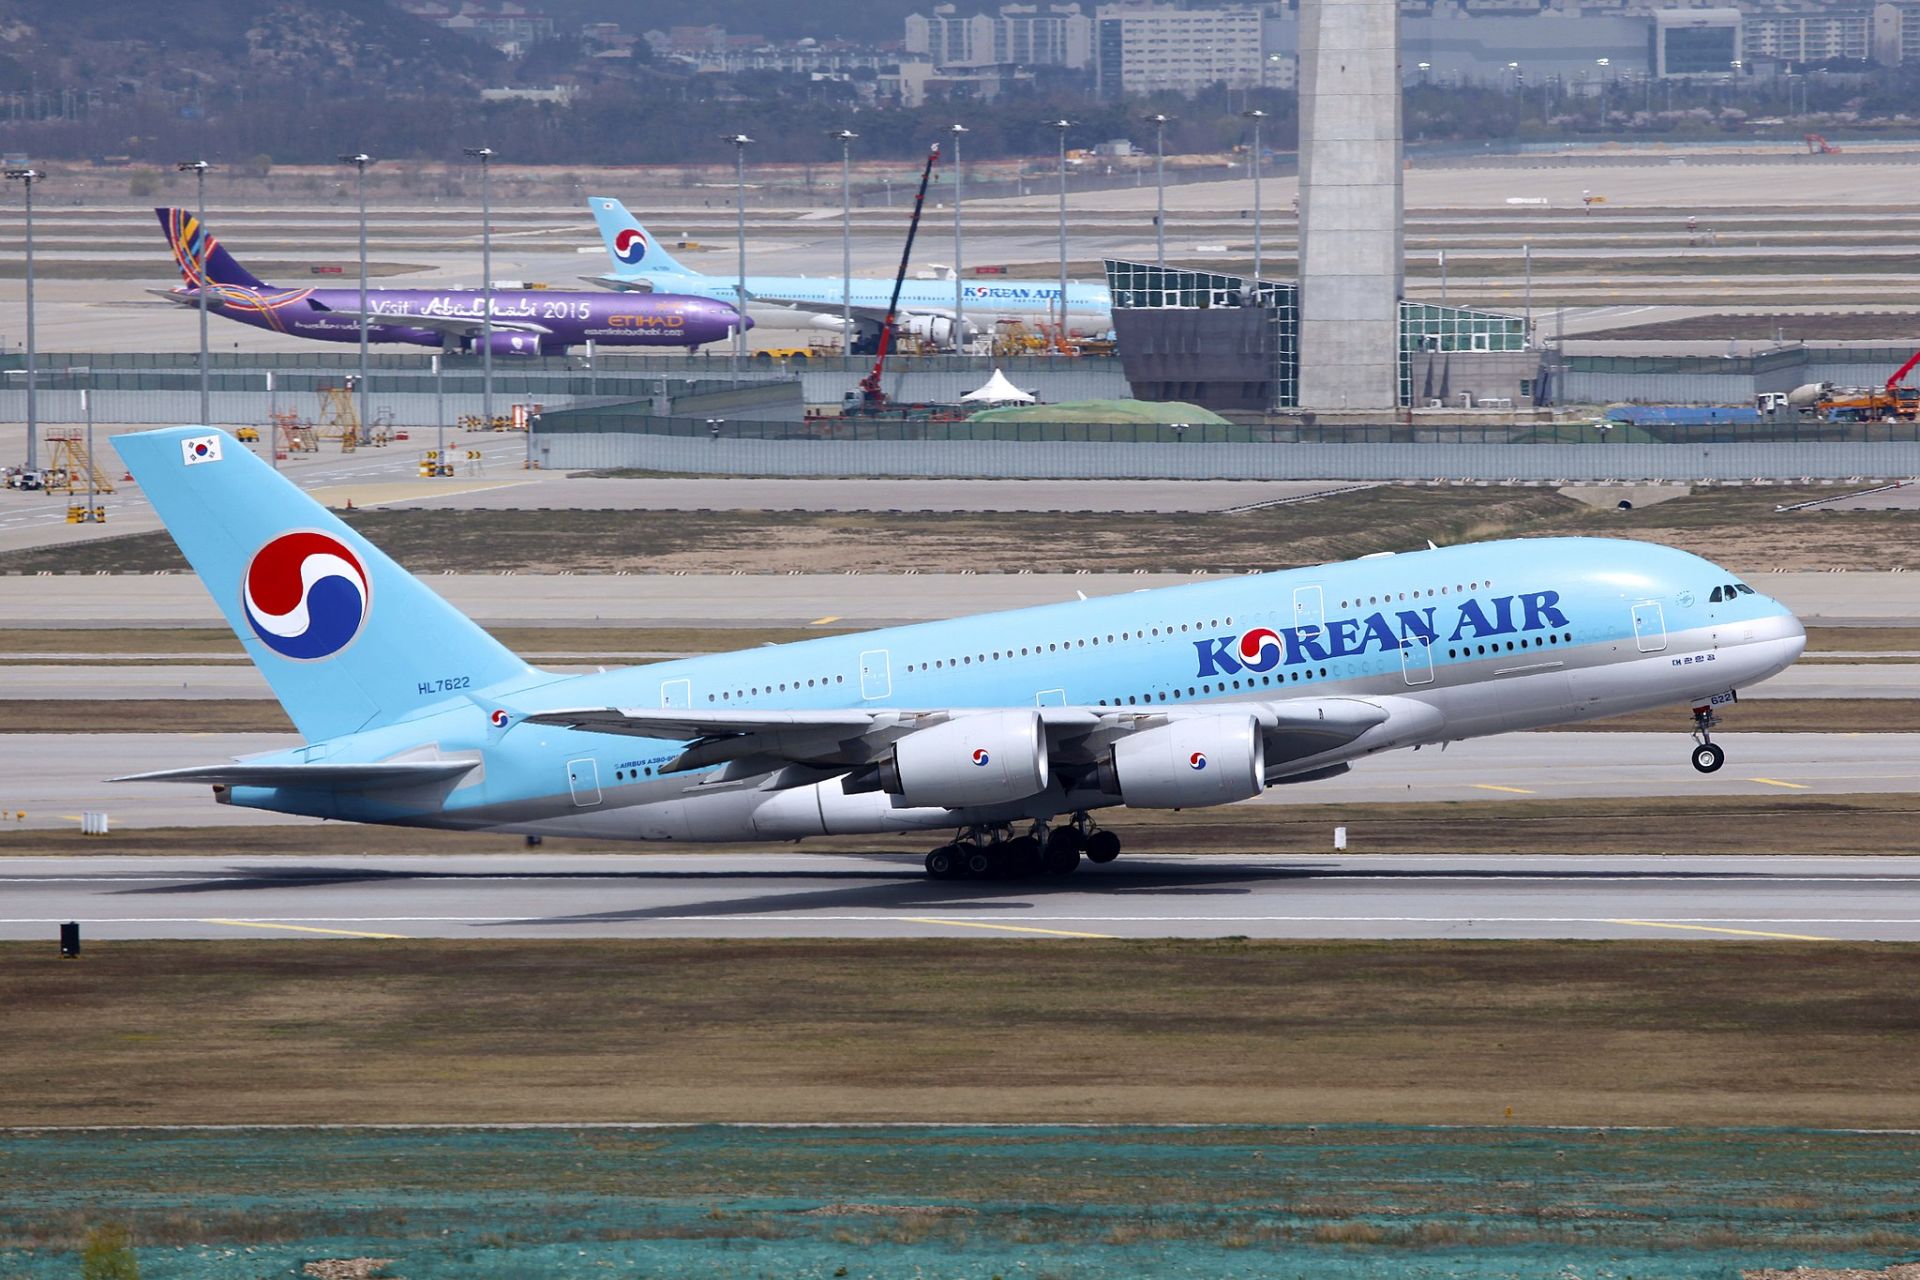 A380 společnosti Korean Air. Foto: https://www.flickr.com/photos/byeangel/17102170800/